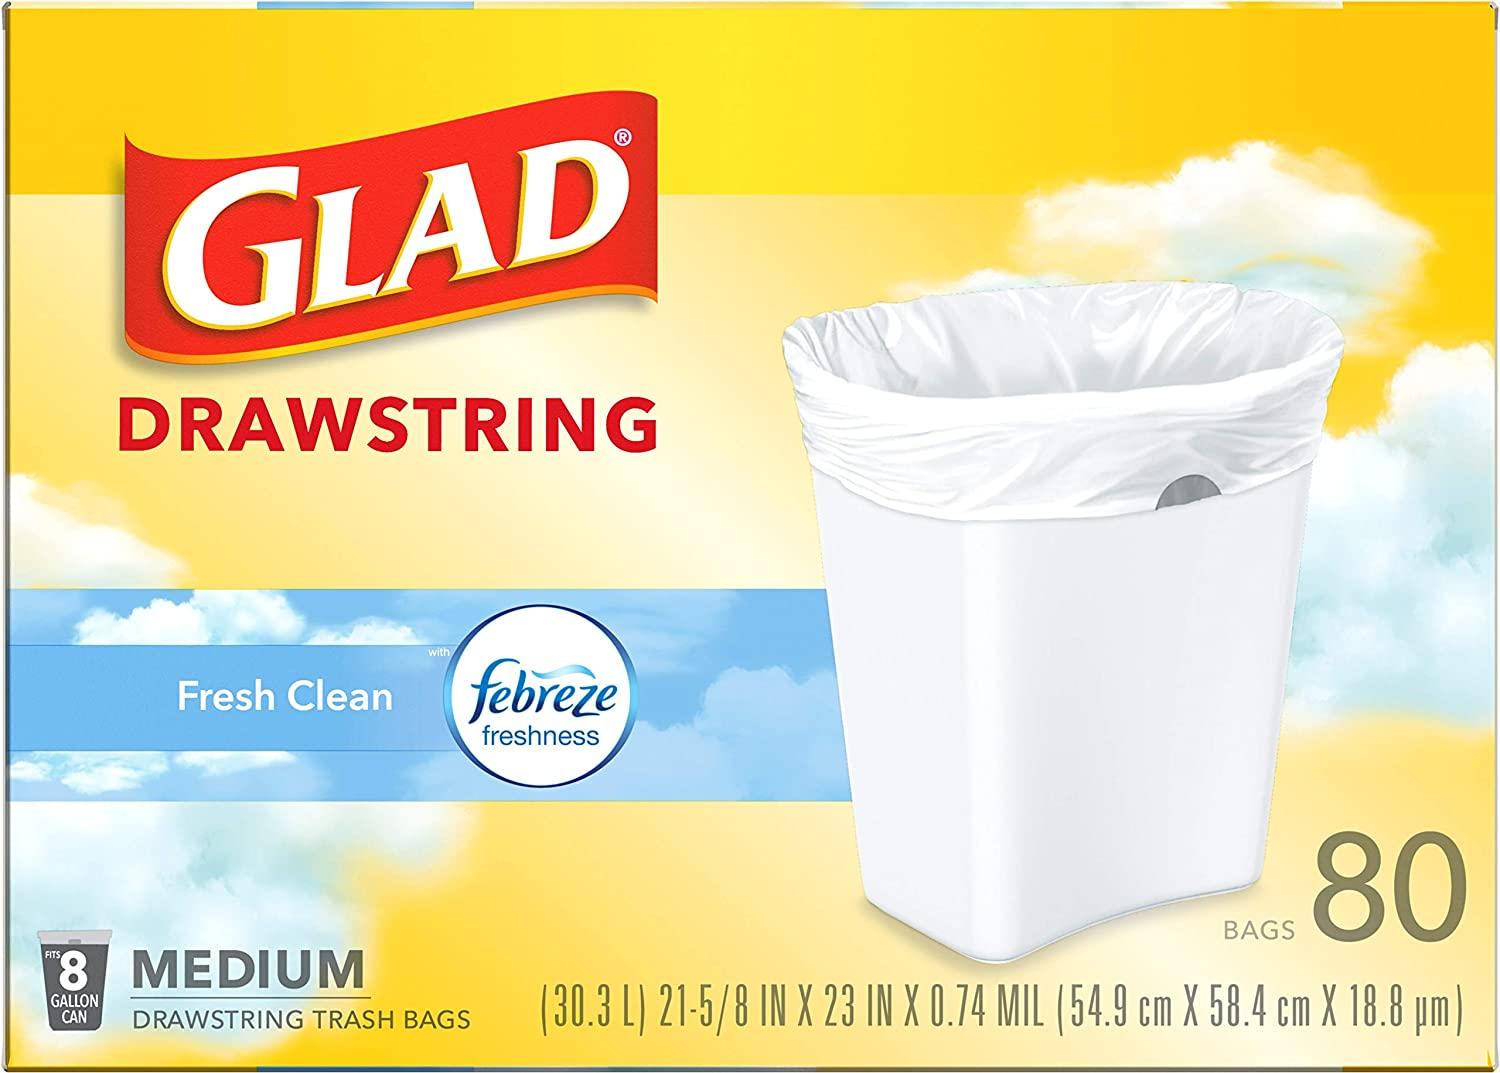  Glad Medium Kitchen Drawstring Trash Bags 8 Gallon White Trash  Bag, Fresh Clean Scent, 80 Count : Health & Household